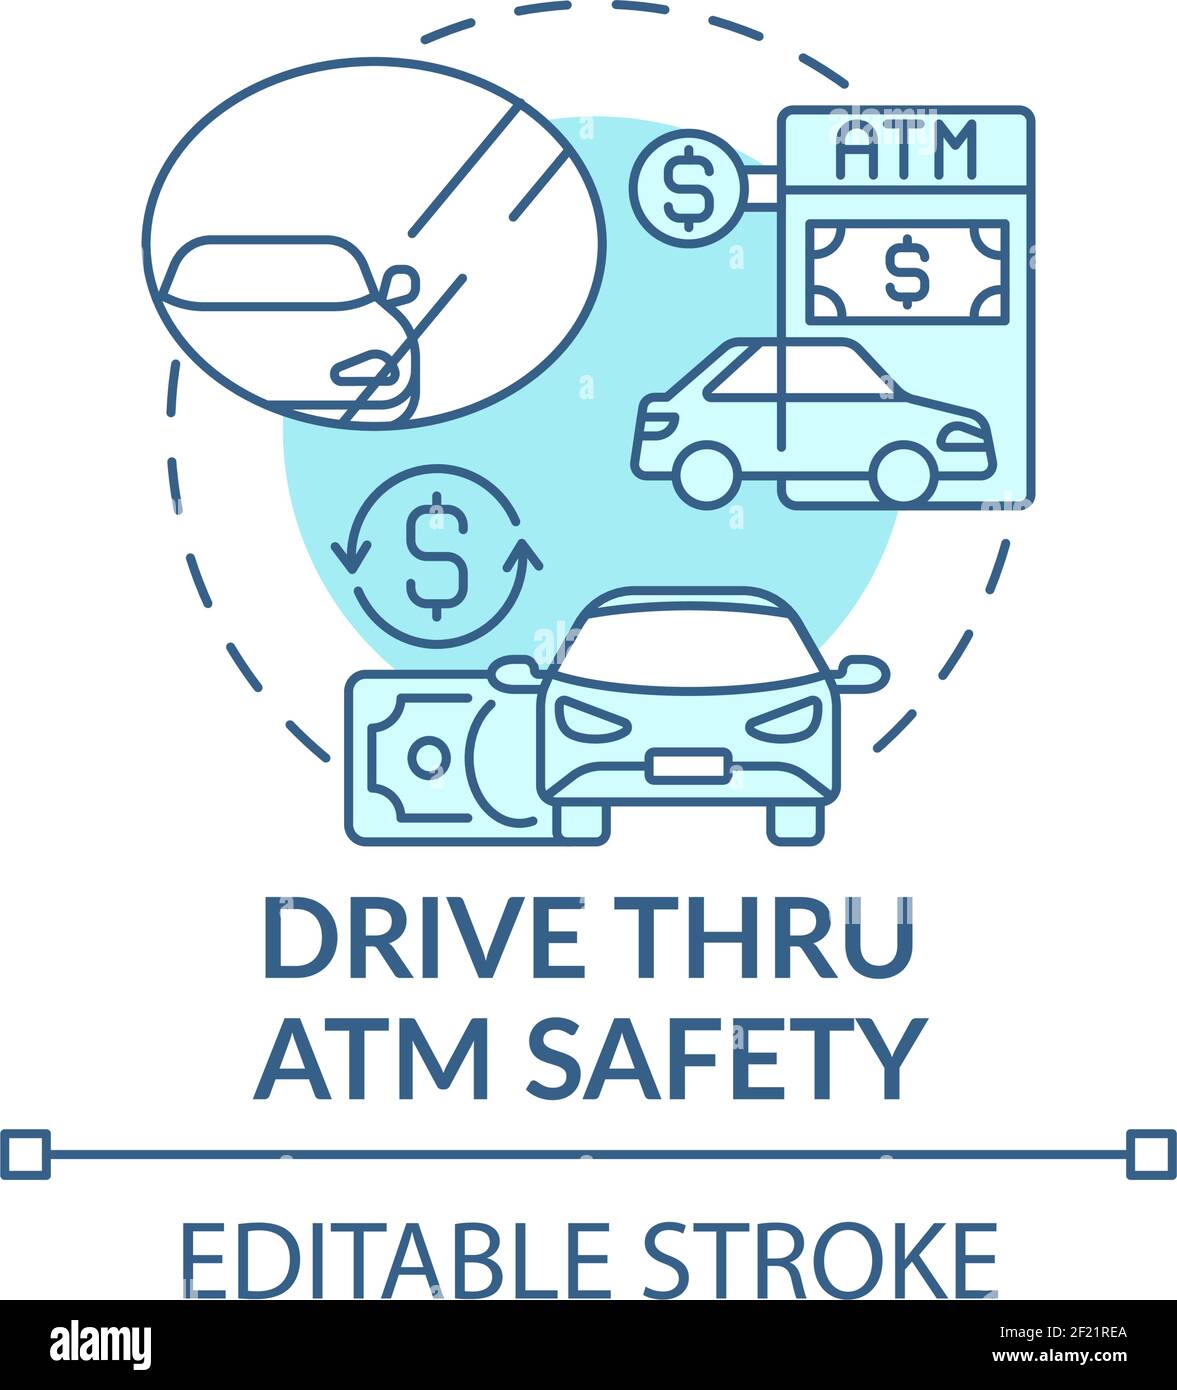 Drive thru ATM safety concept icon Stock Vector